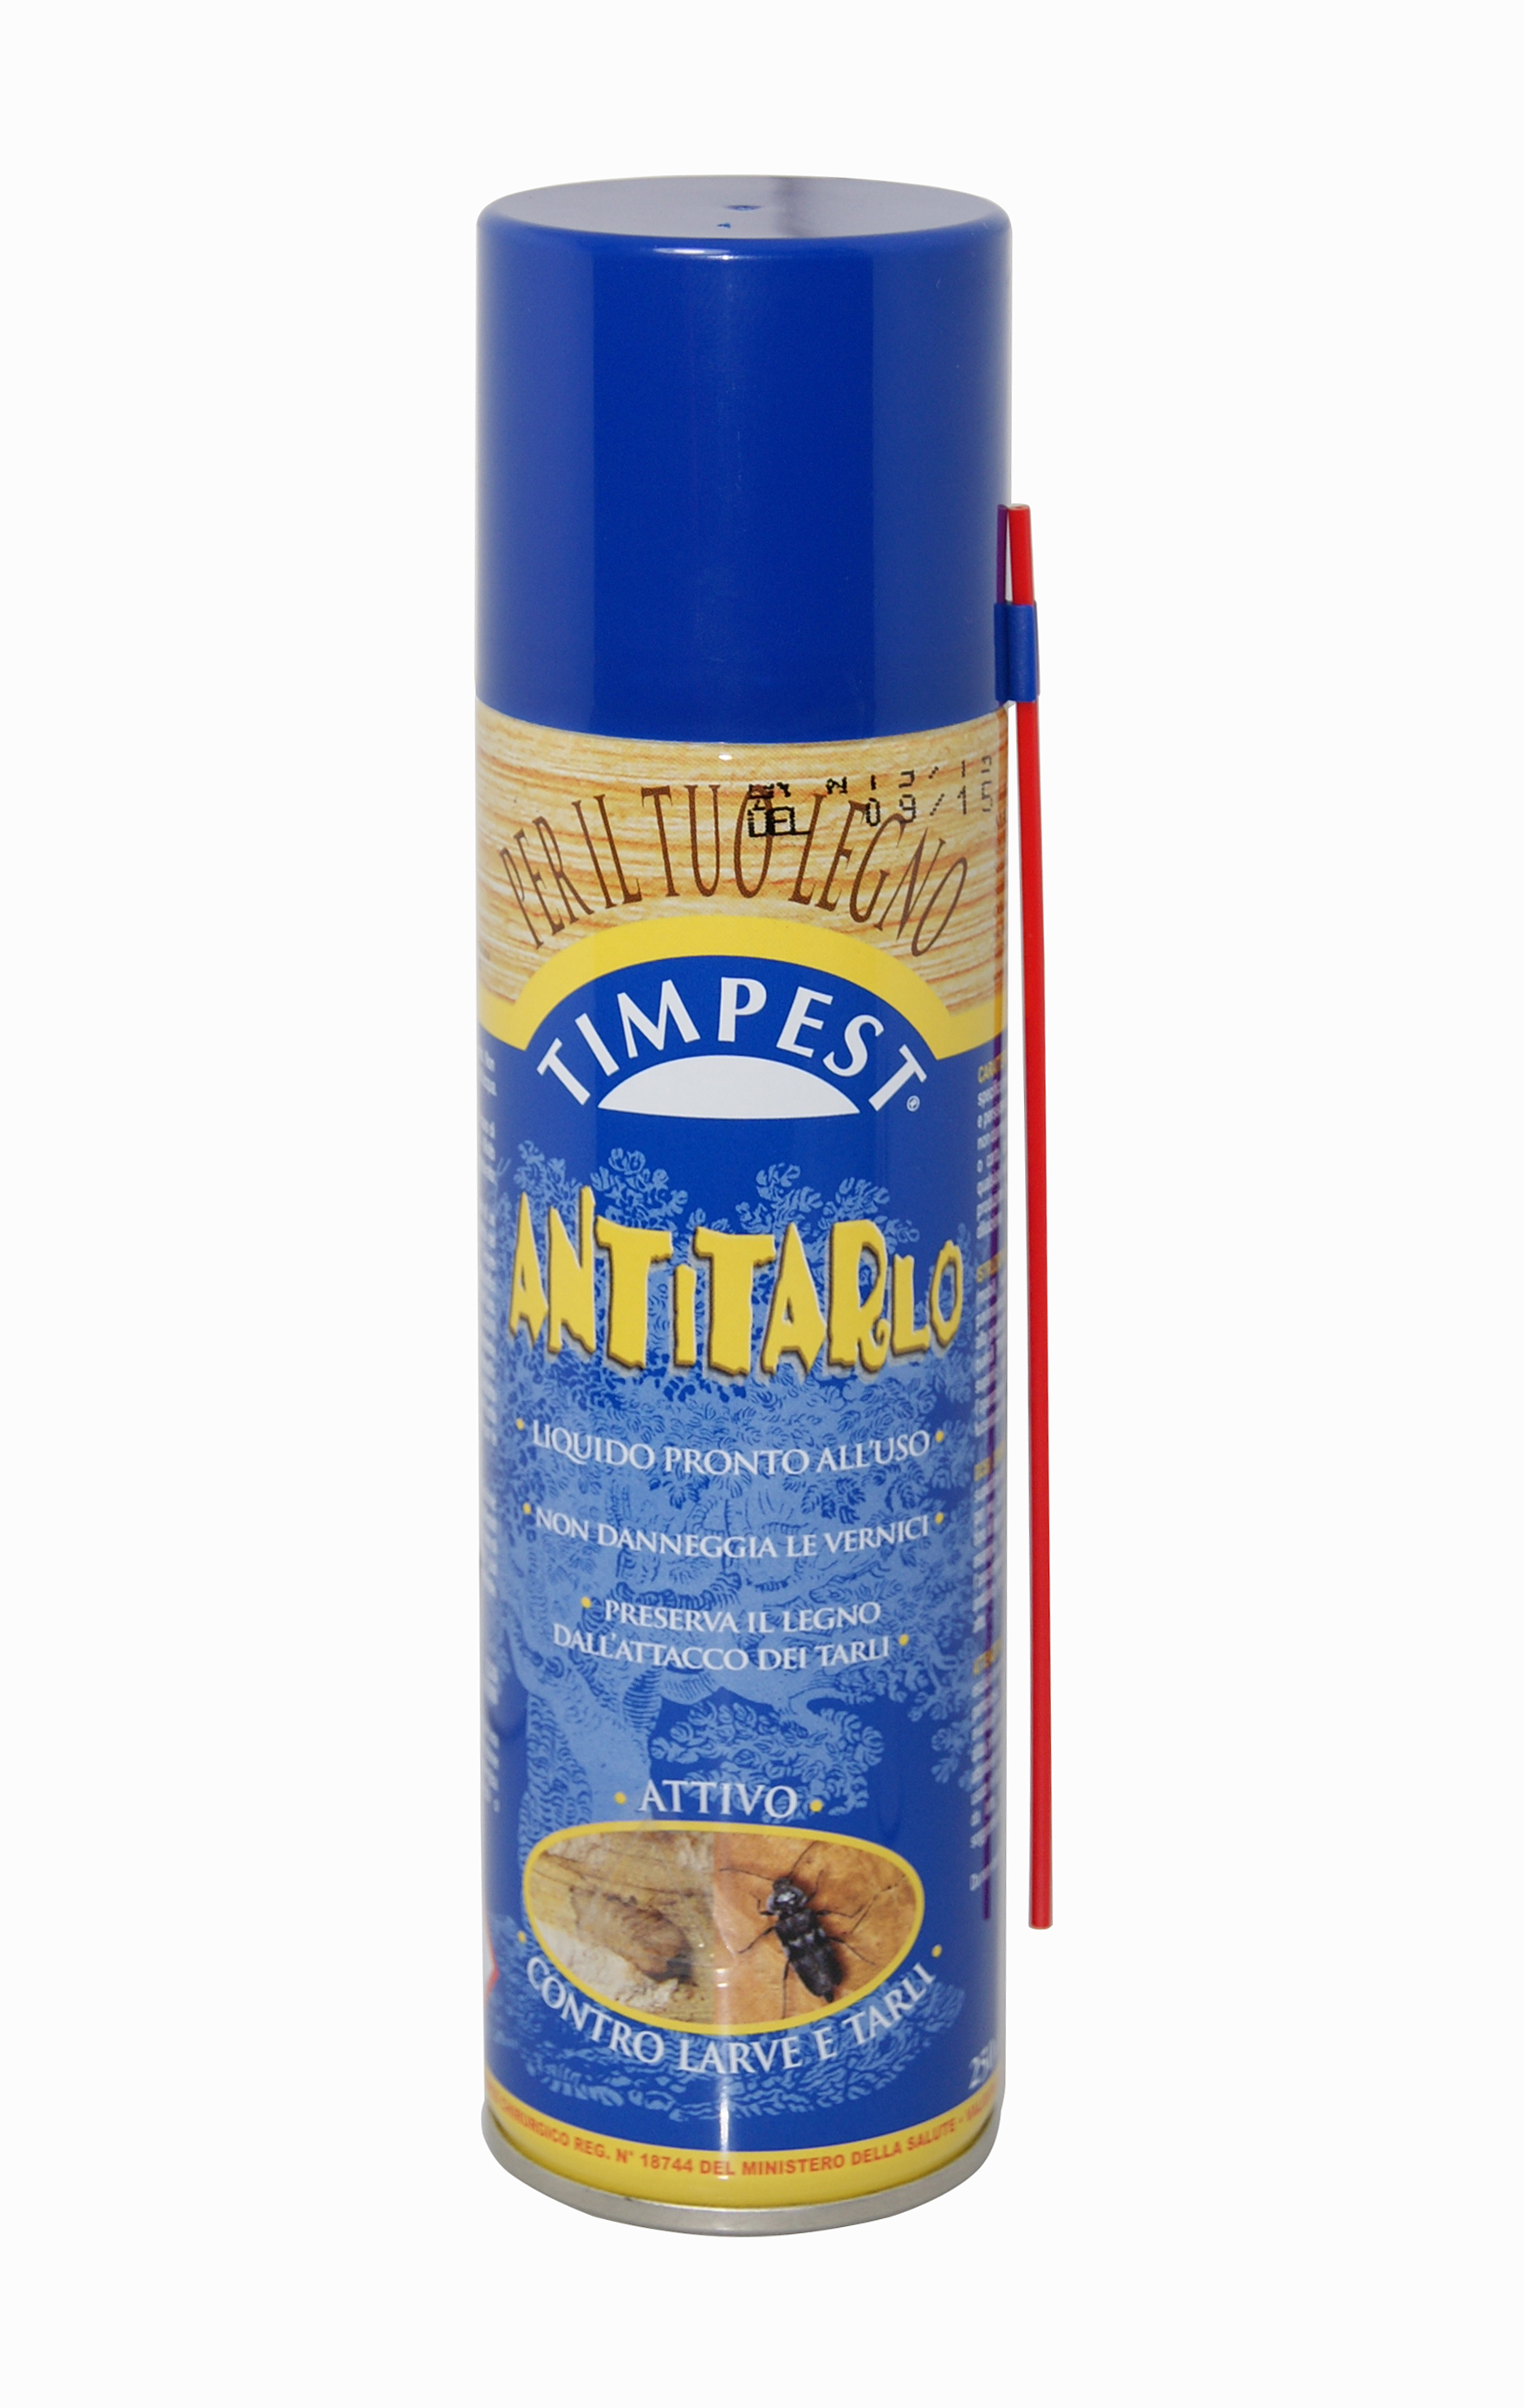 Timpest - antitarlo inodore spray 250 ml - VERNICI, DILUENTI E